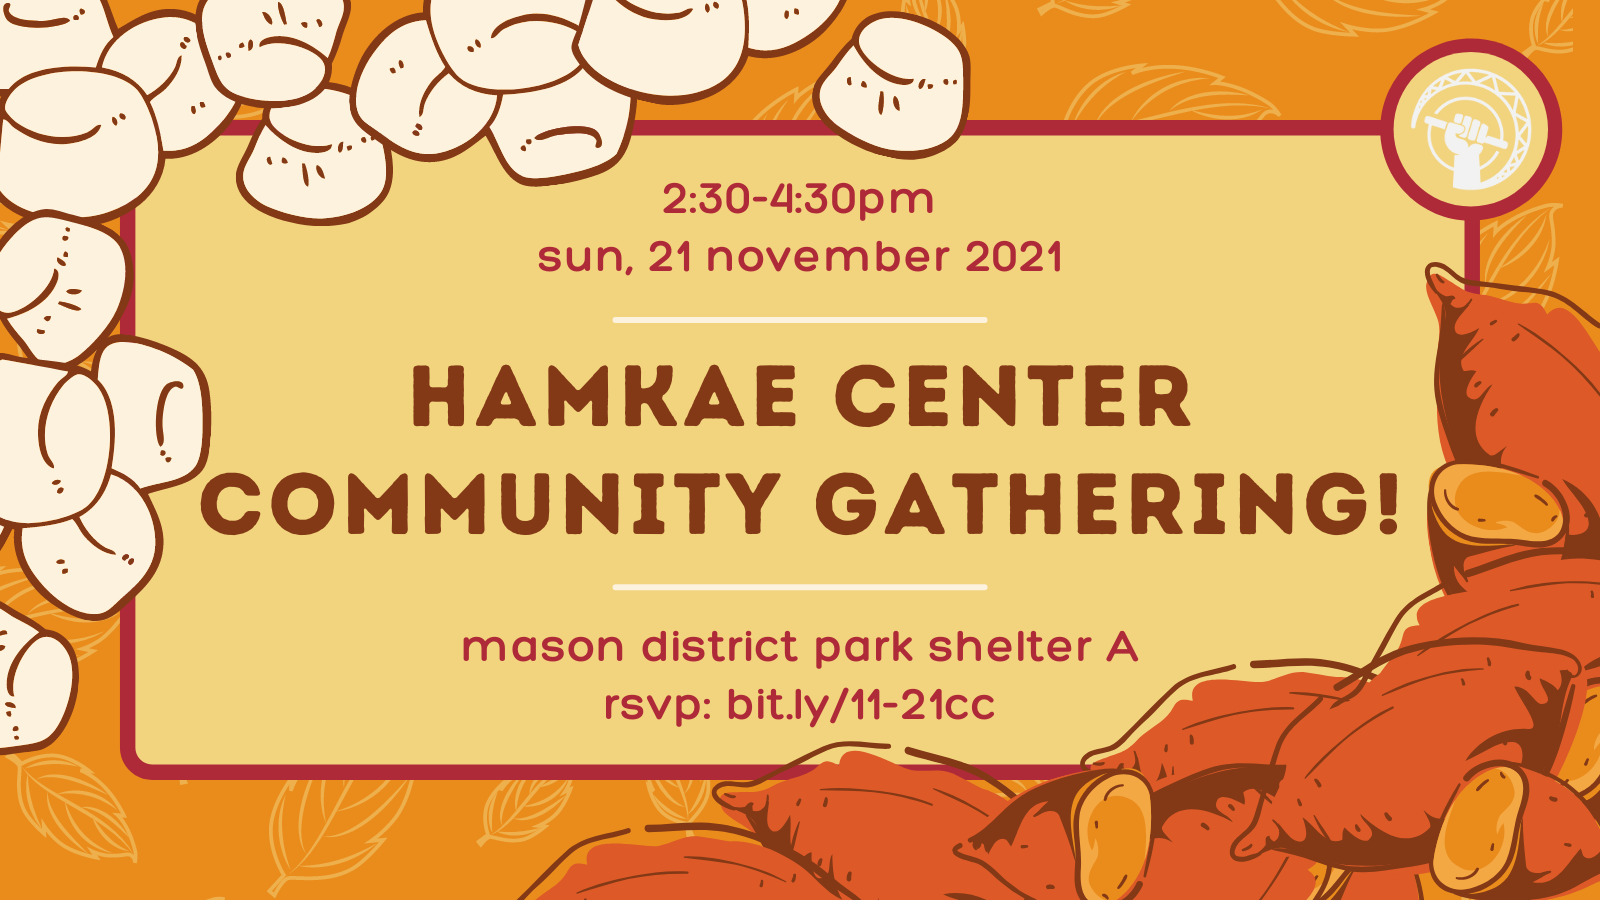 2:30-4:30pm on Sun, 21 November 2021 Hamkae Center Community Gathering! Mason District Park Shelter A RSVP: bit.ly/11-21cc